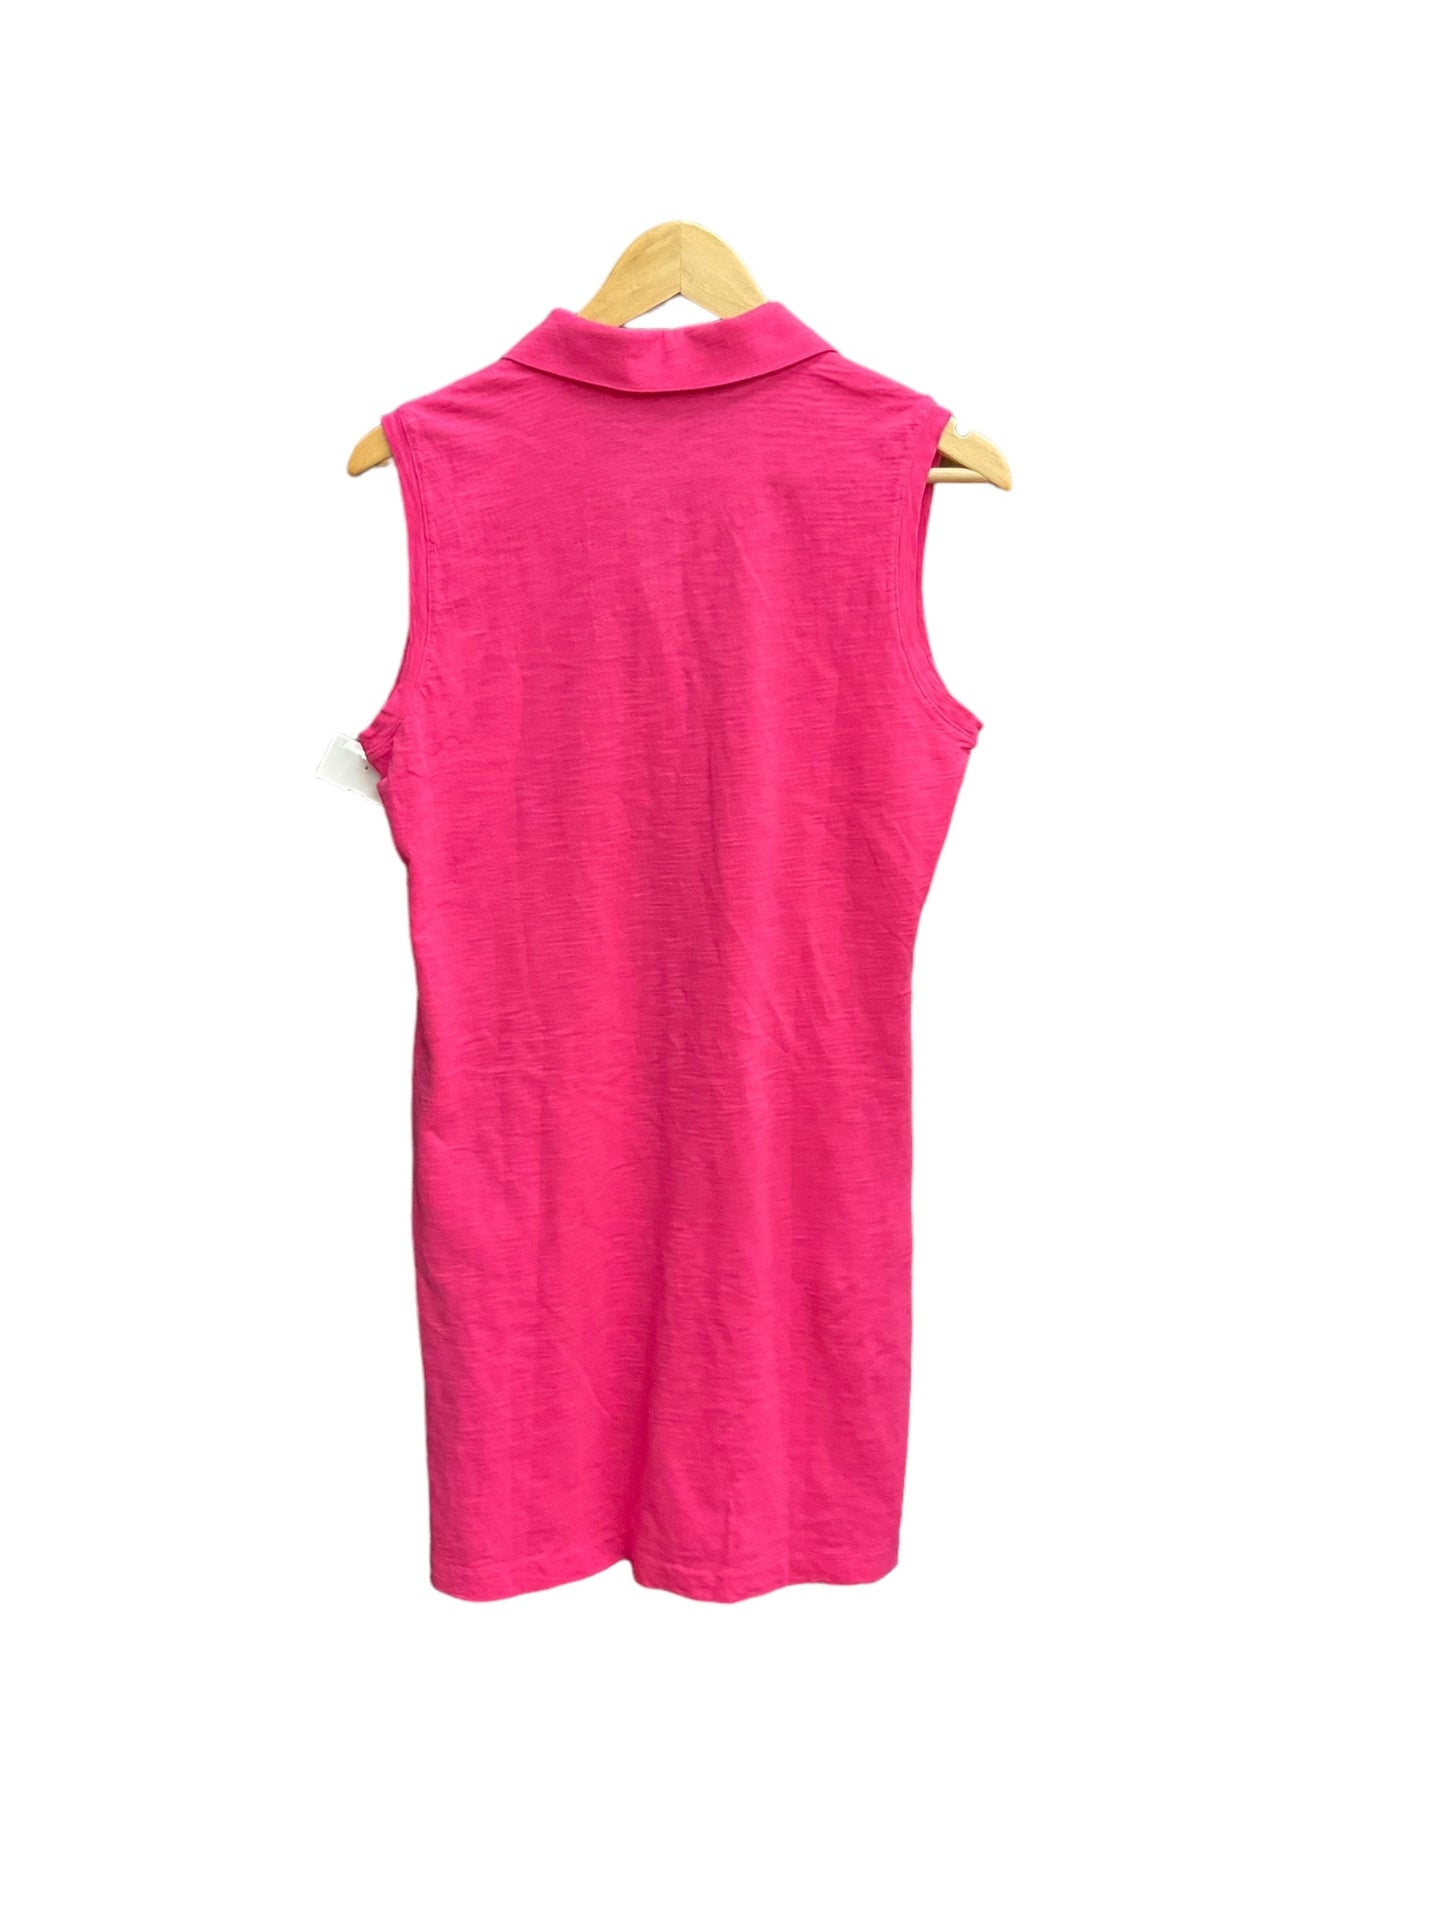 Pink Athletic Dress Vineyard Vines, Size S